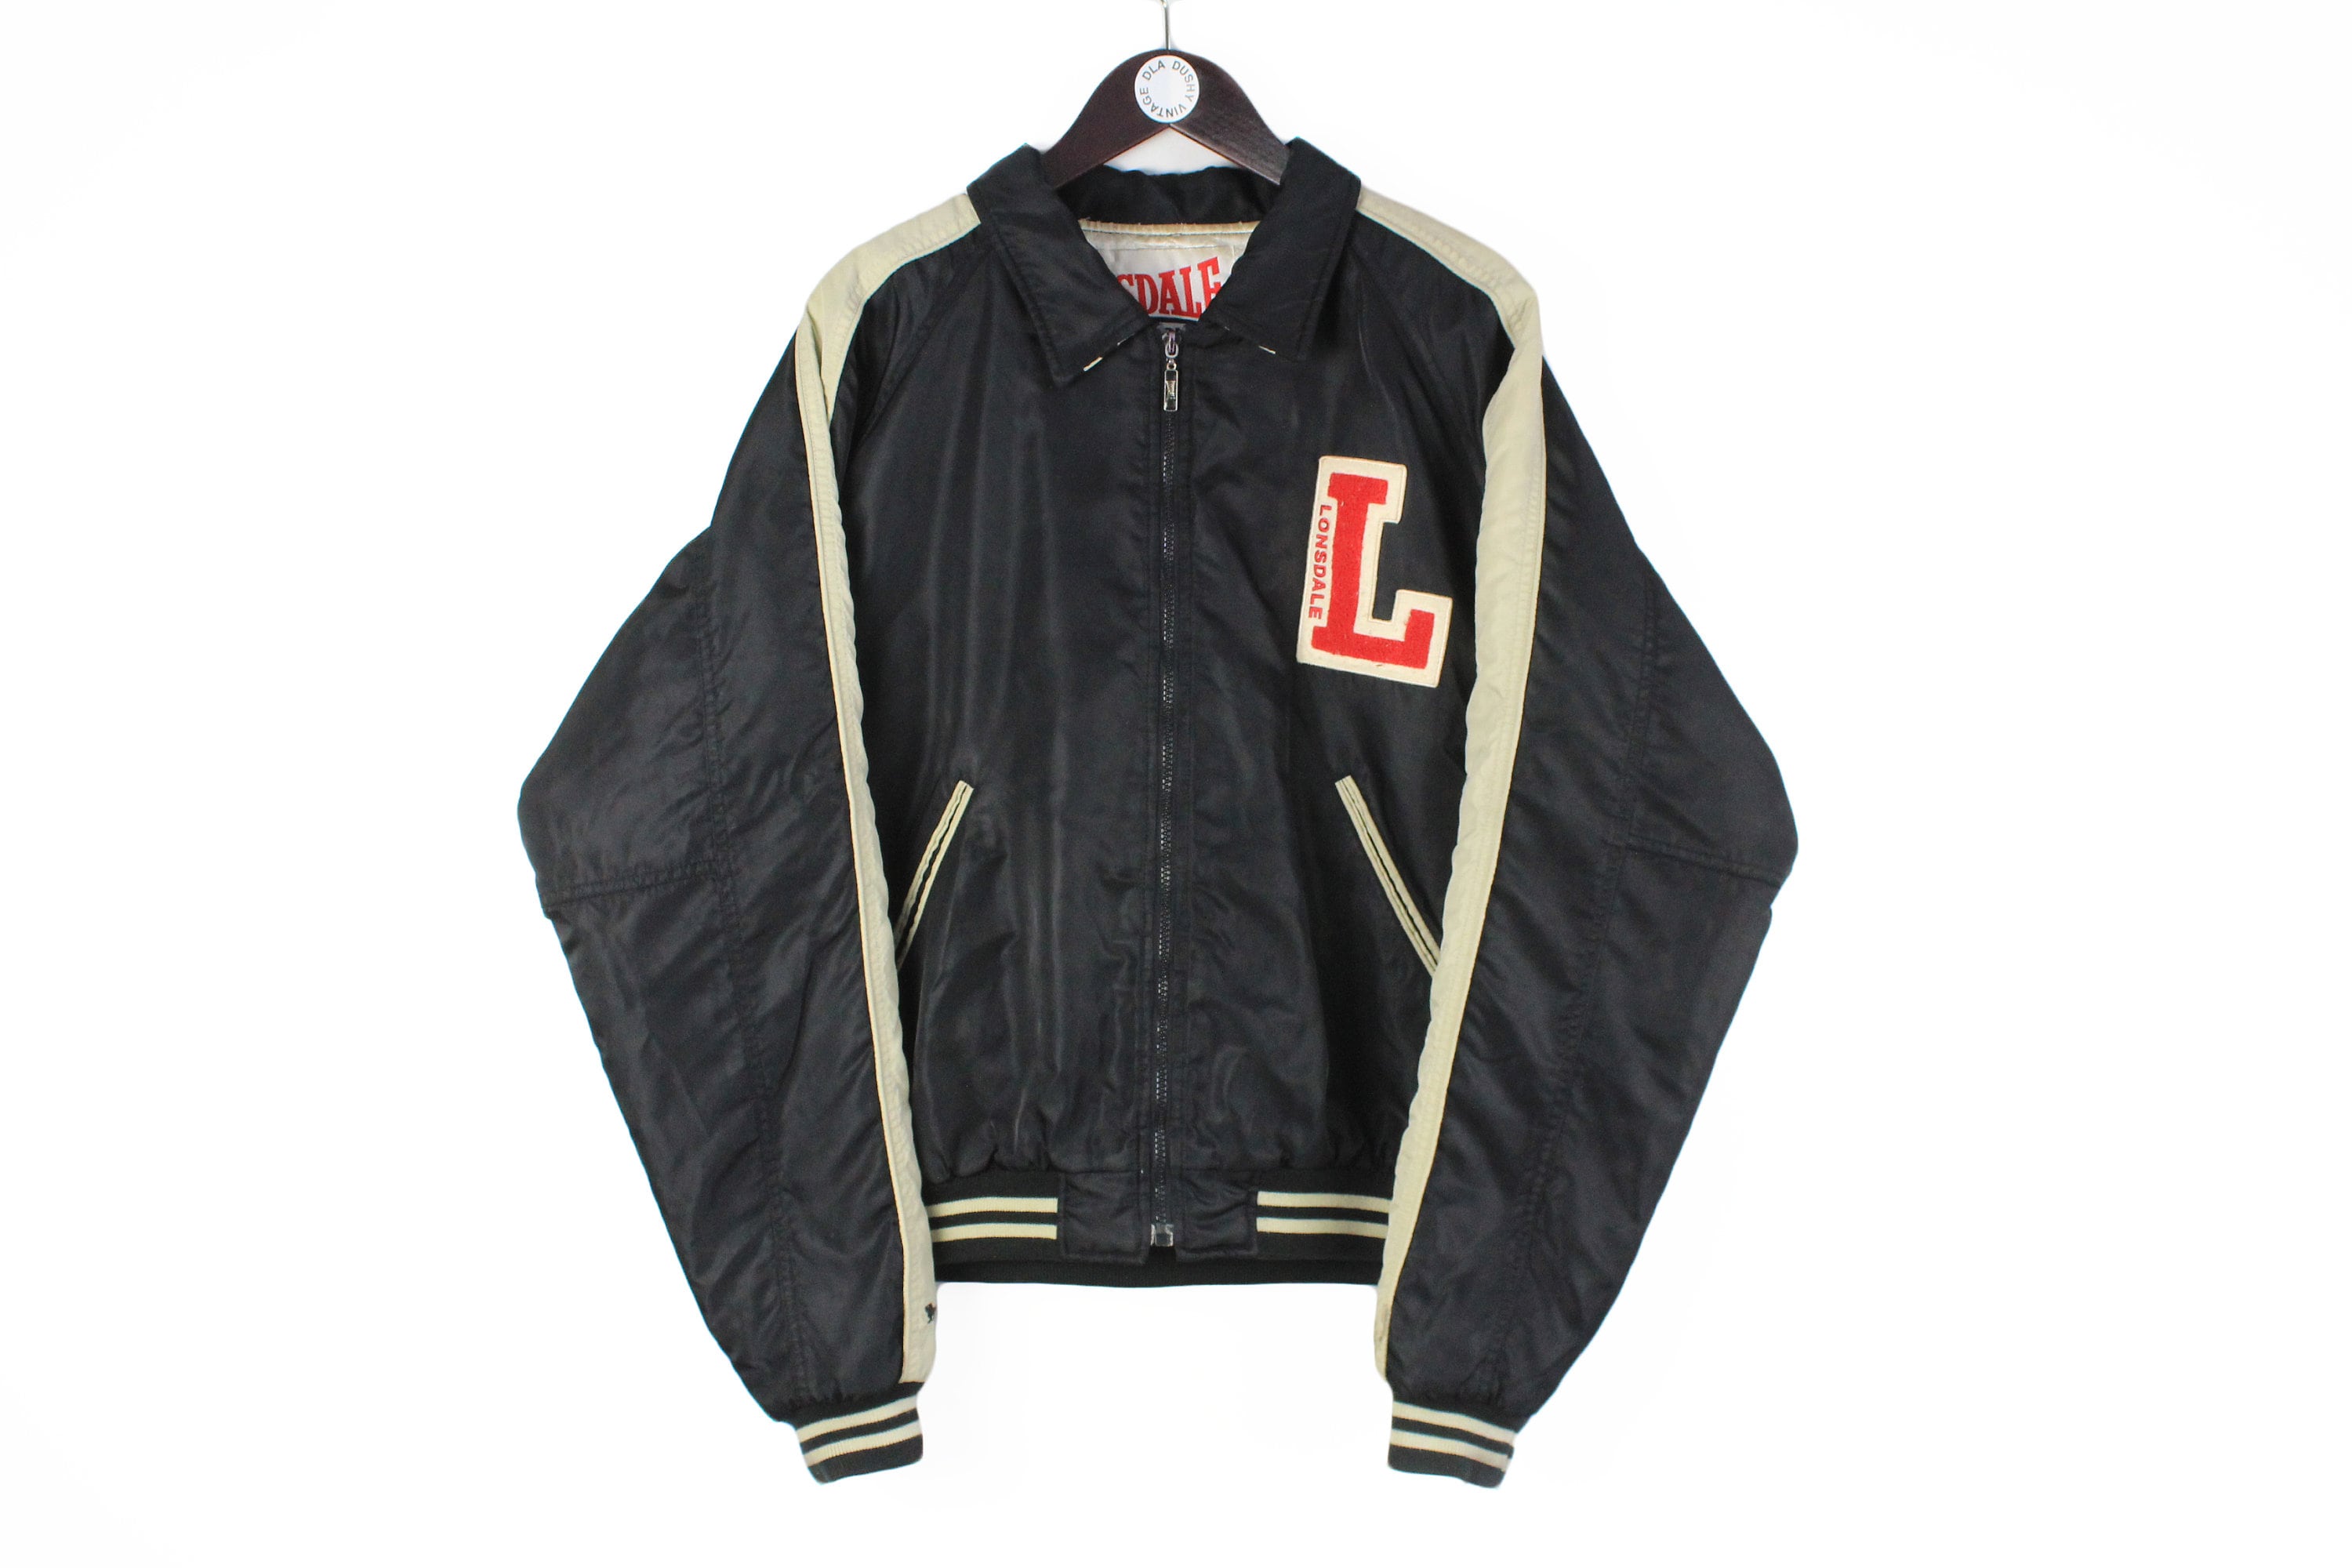 Vintage LONSDALE Jacket Big Logo Authentic Team Sport Wear Full Zip UK  Clothing 90's Mod Style Size XL Men's Black Retro Skinhead Collared - Etsy